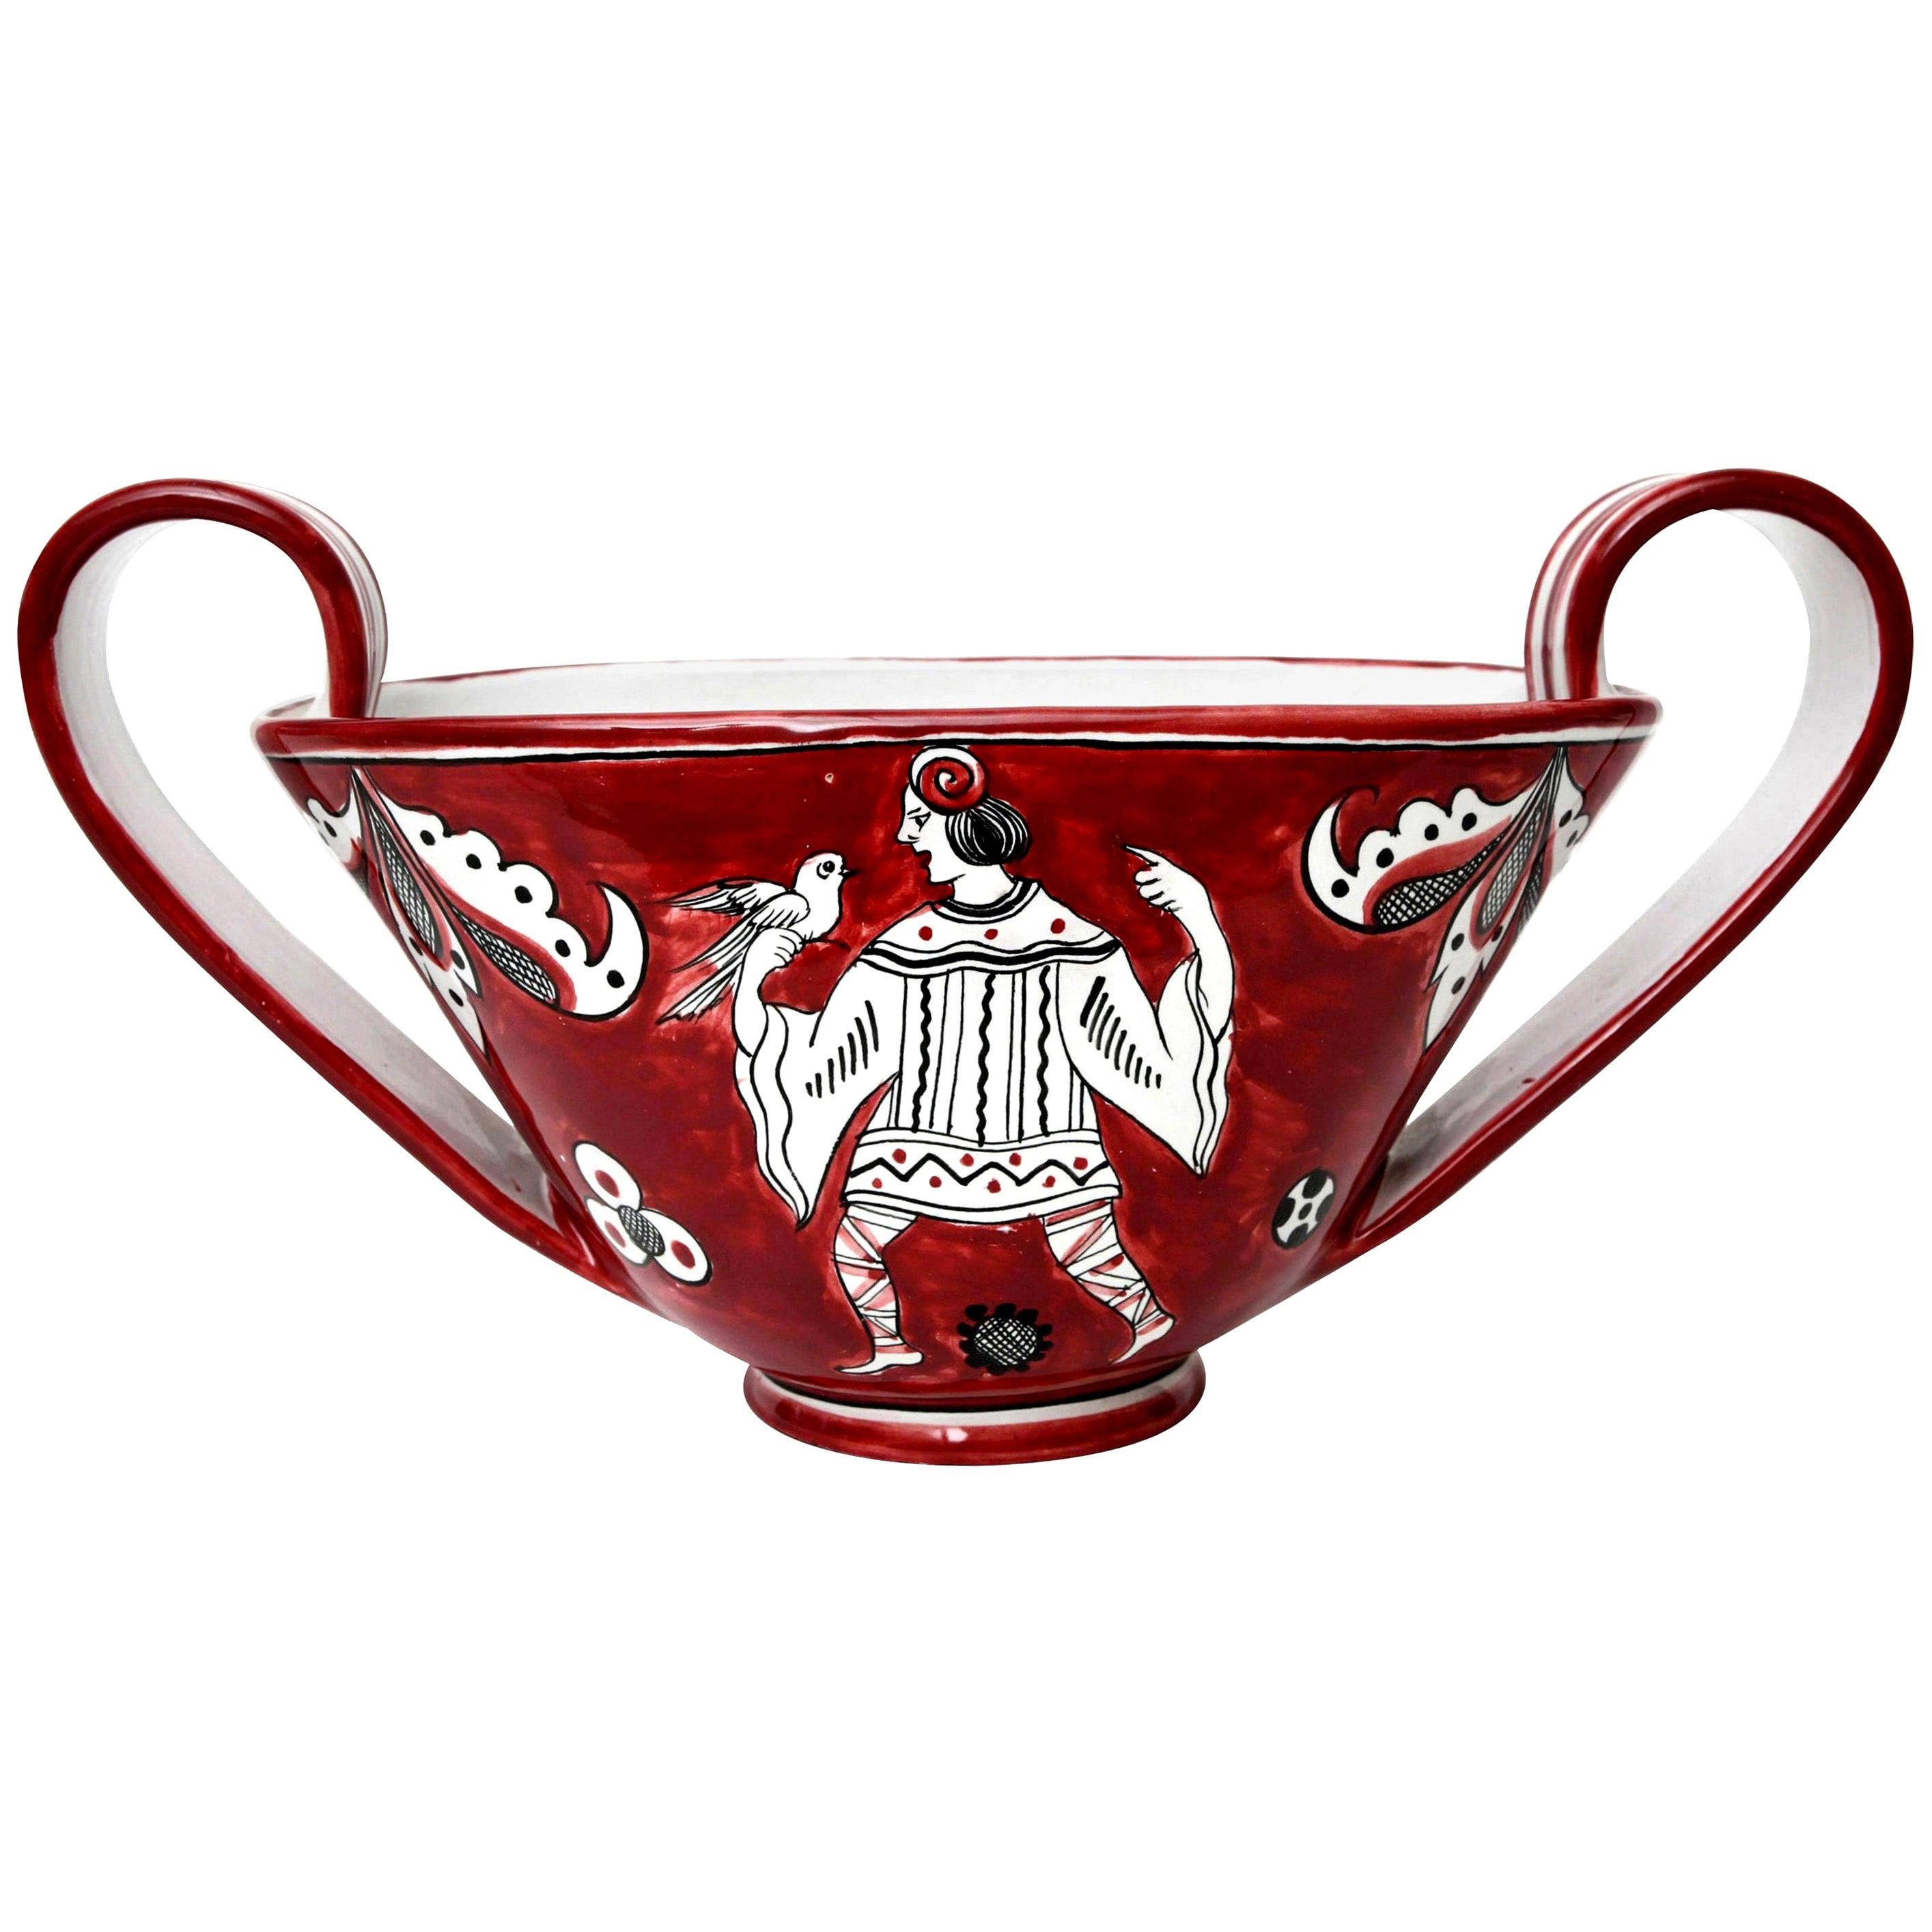 Italian Glazed Red, White and Black Ceramic Bowl or Vessel Mid-Century Modern